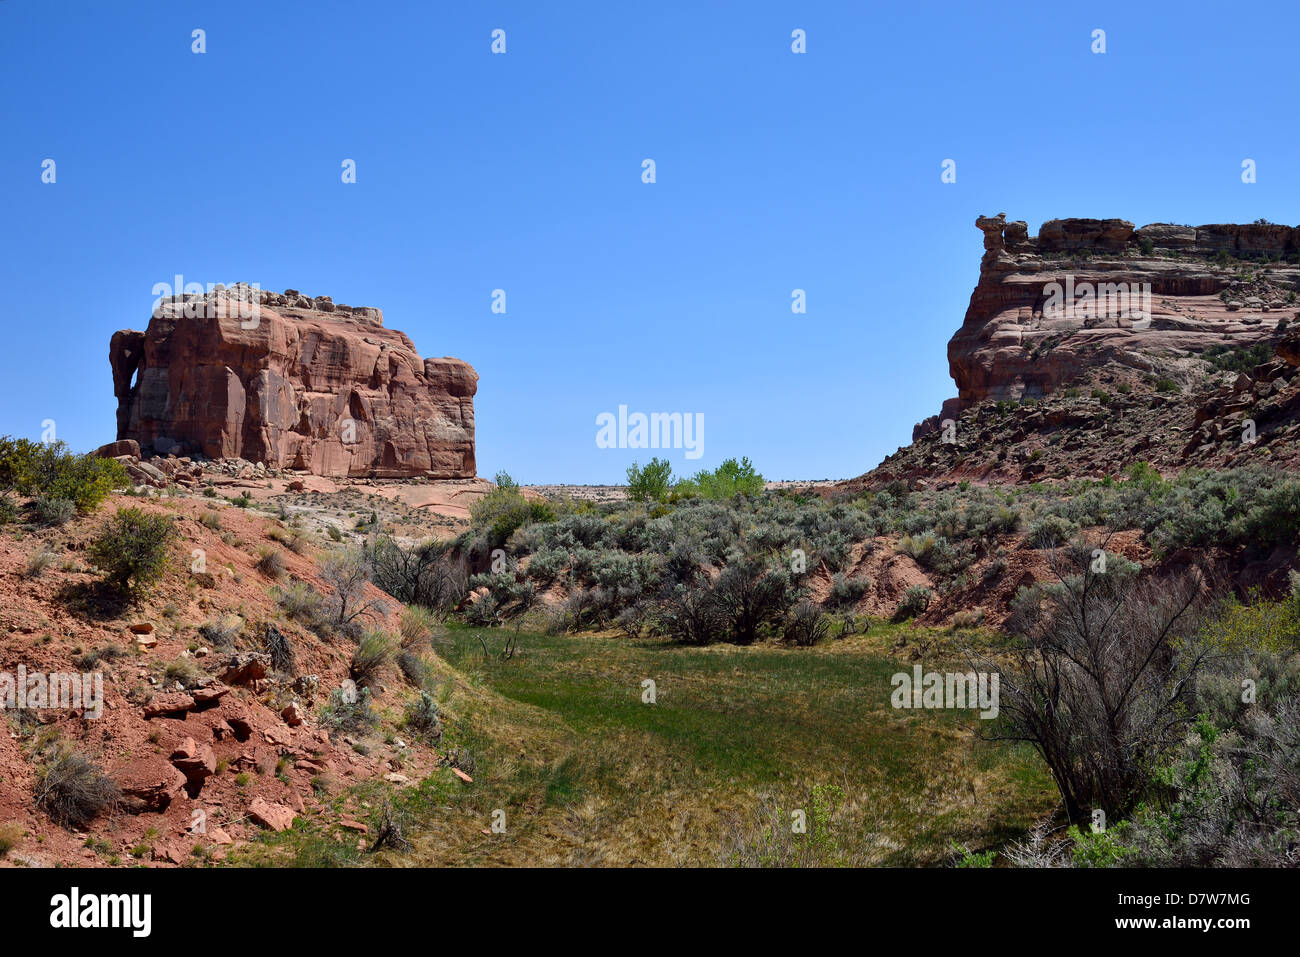 Red sandstone cliff of Colorado Plateau. Moab, Utah, USA. Stock Photo